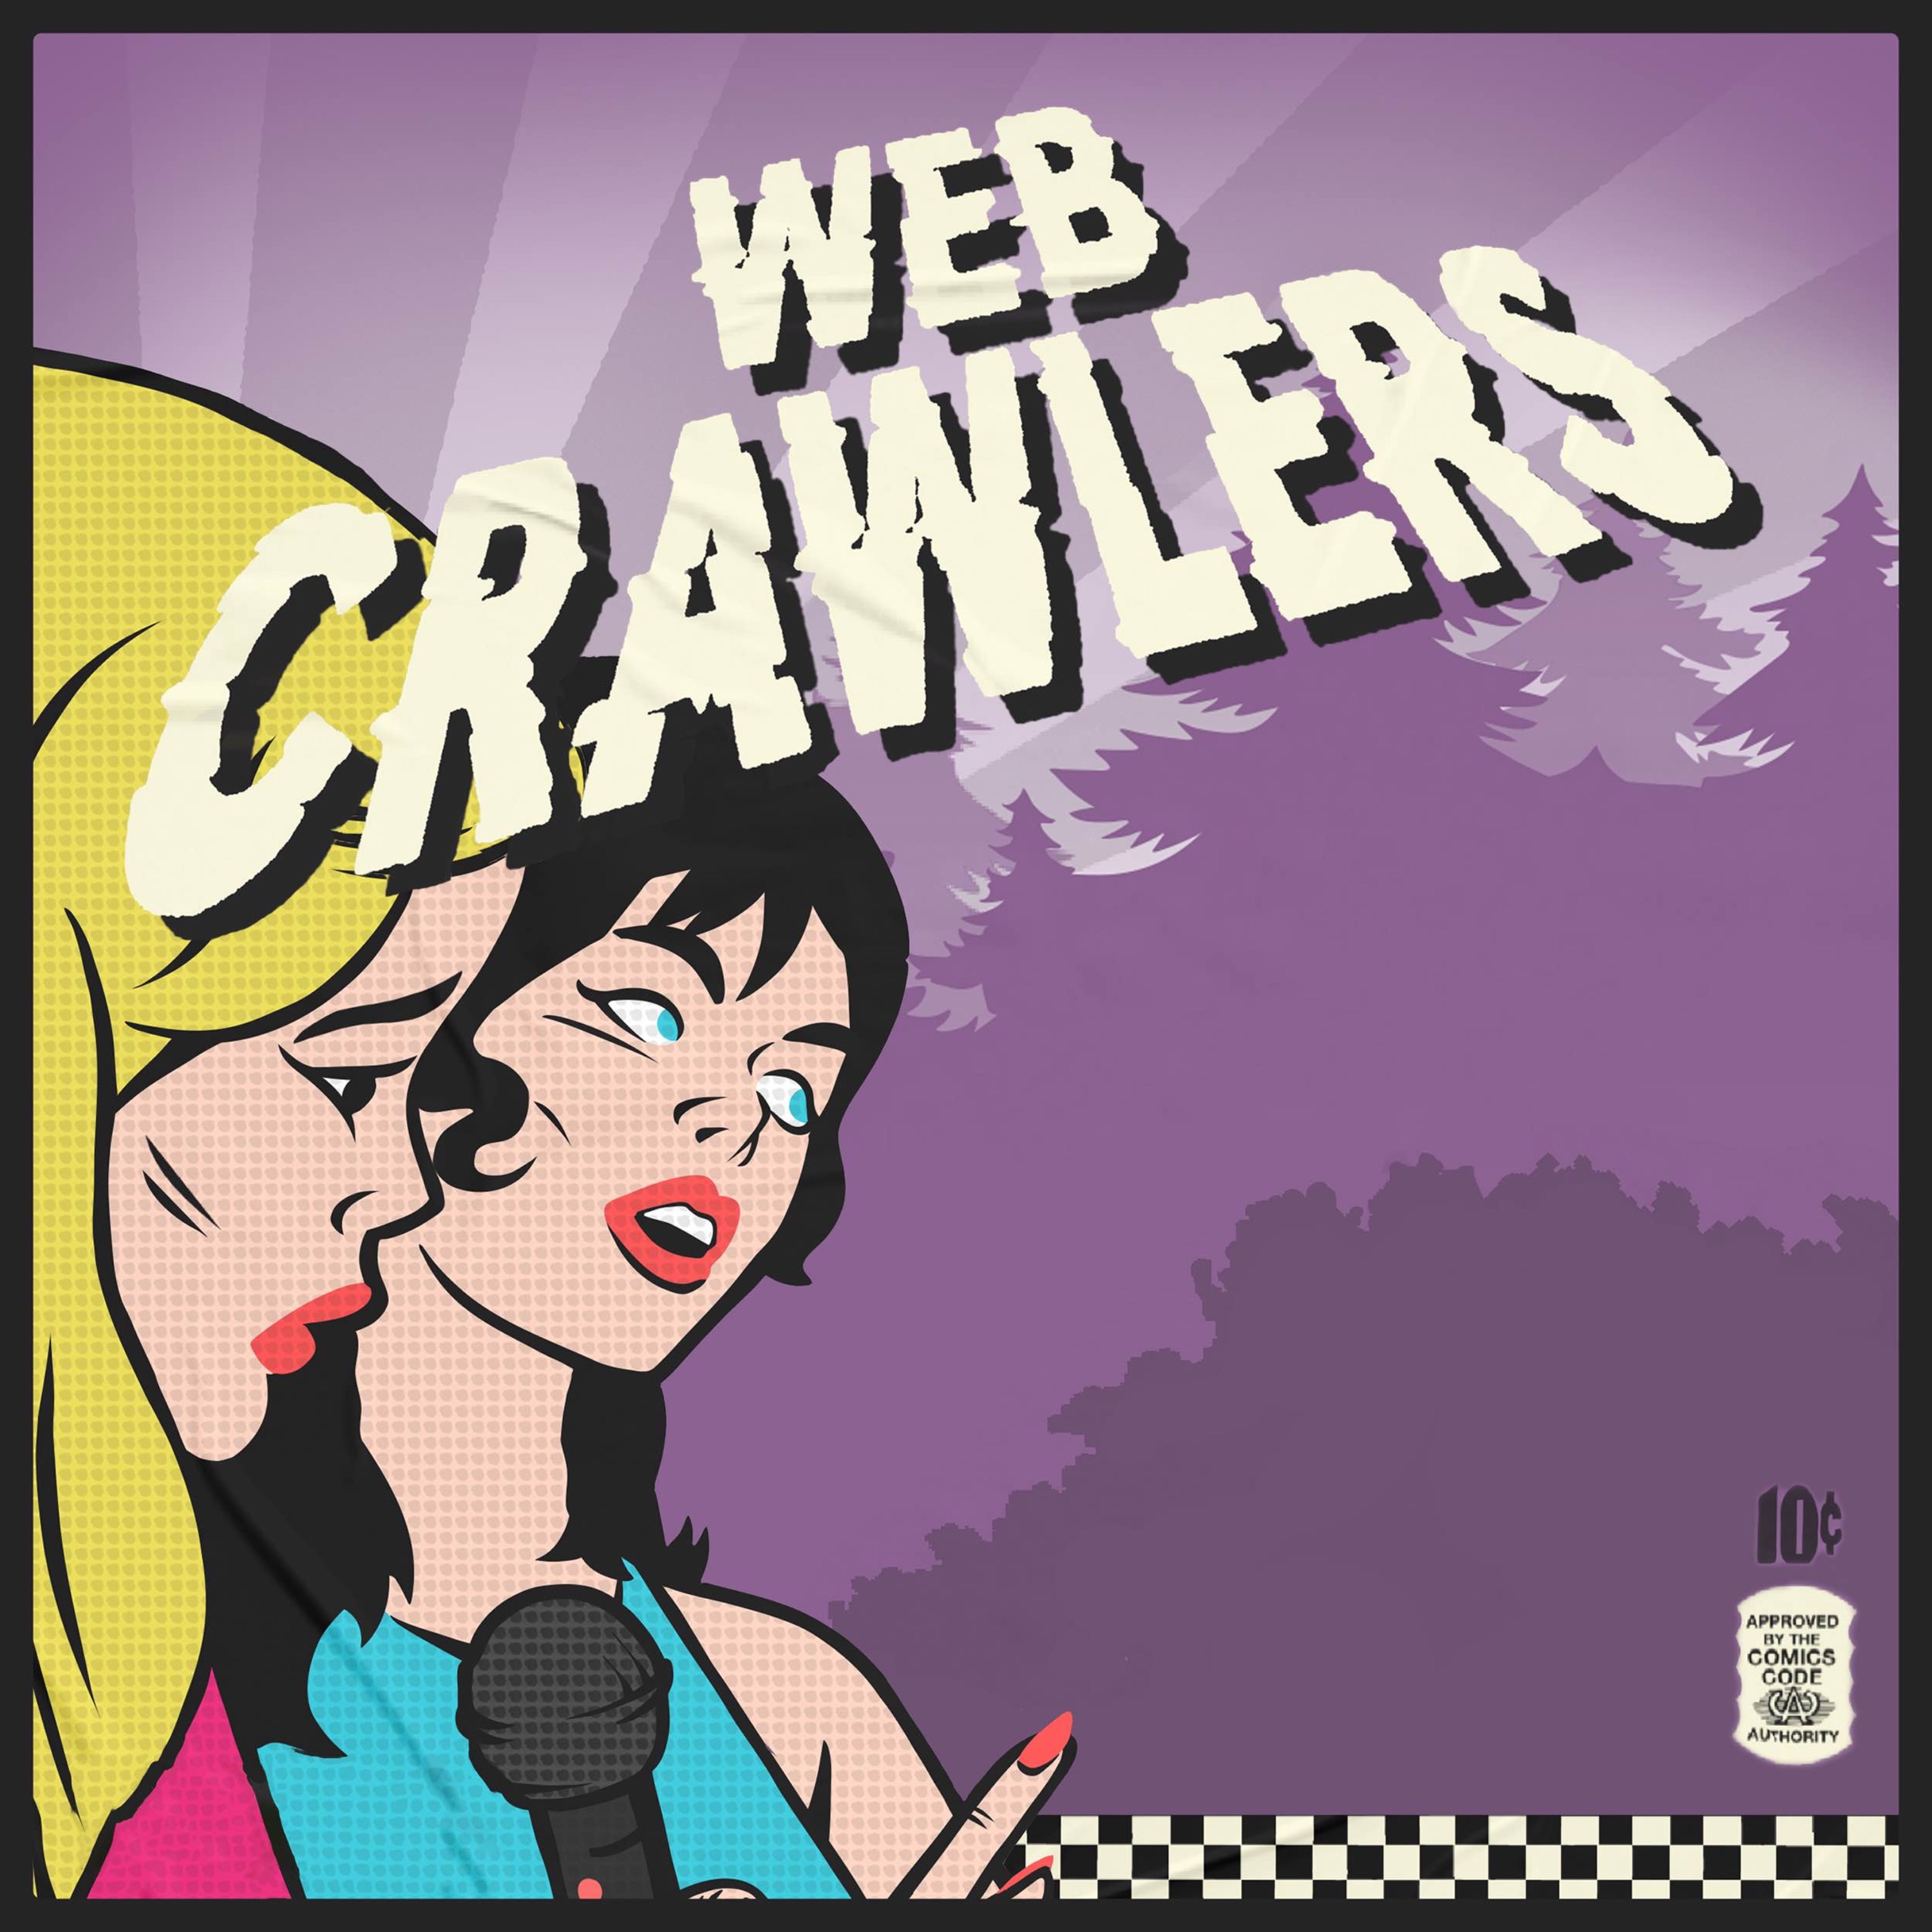 Web Crawlers podcast show image